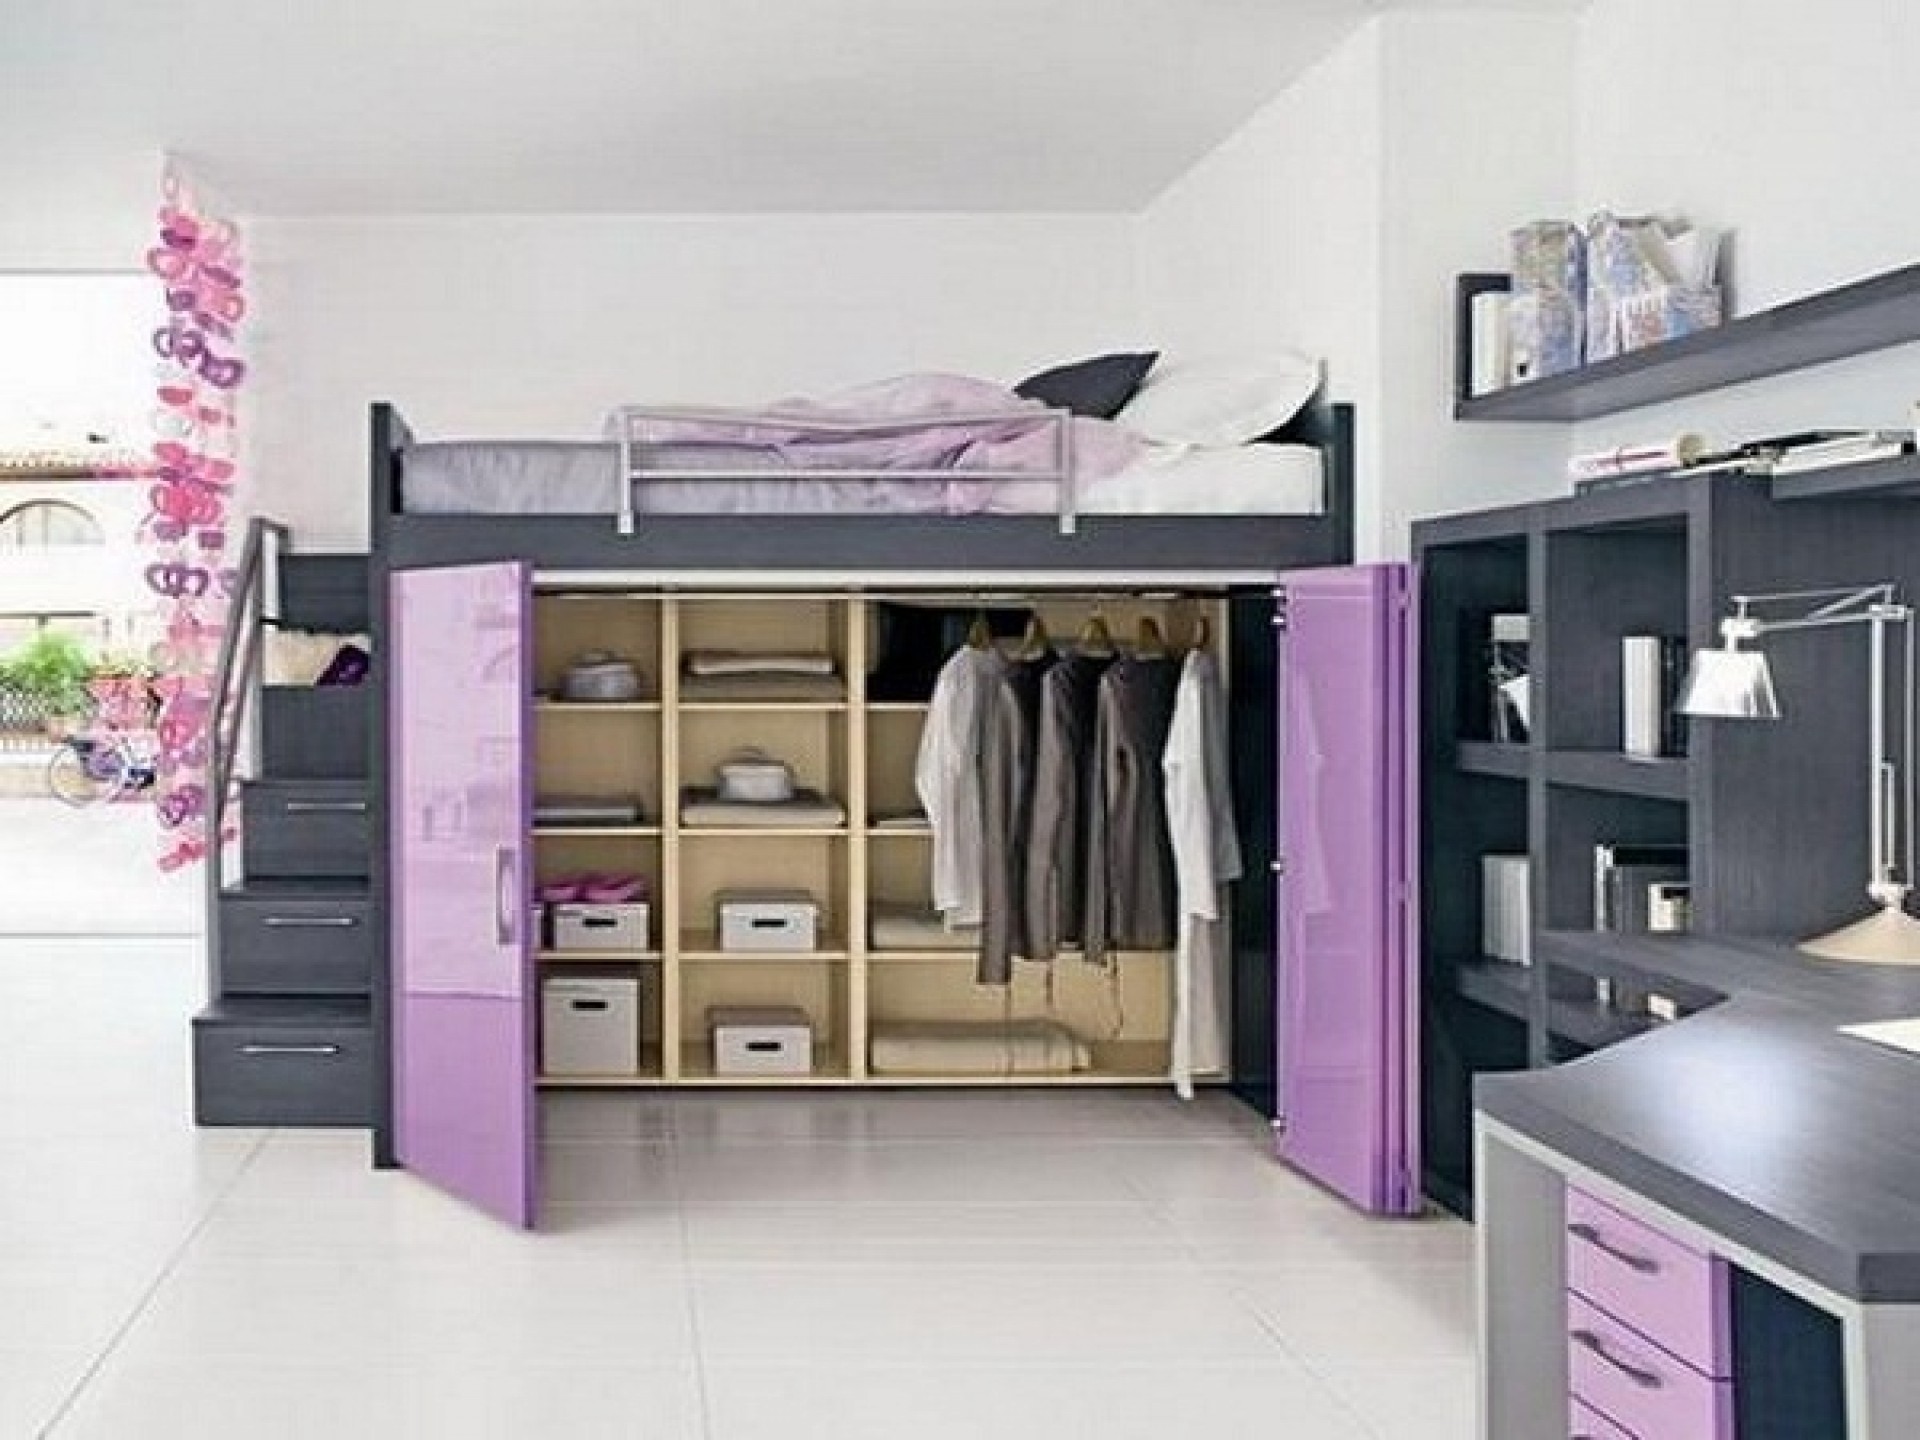 Loft beds with storage underneath